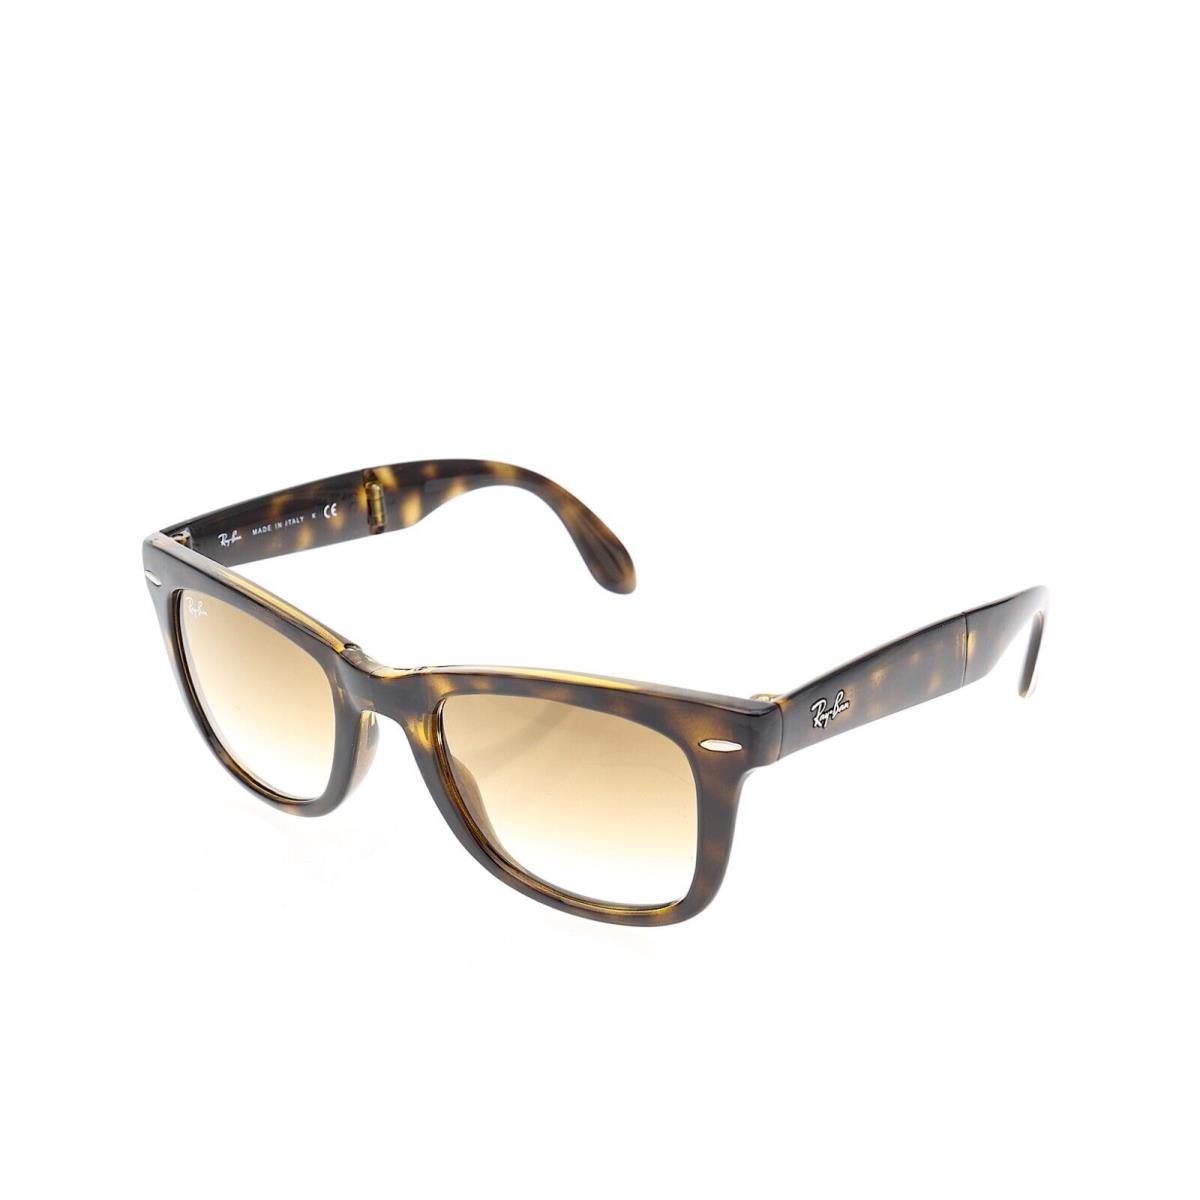 Ray-ban Standard 50mm Folding Brown Wayfarer Sunglasses S3954 - Frame: Brown, Lens: Brown